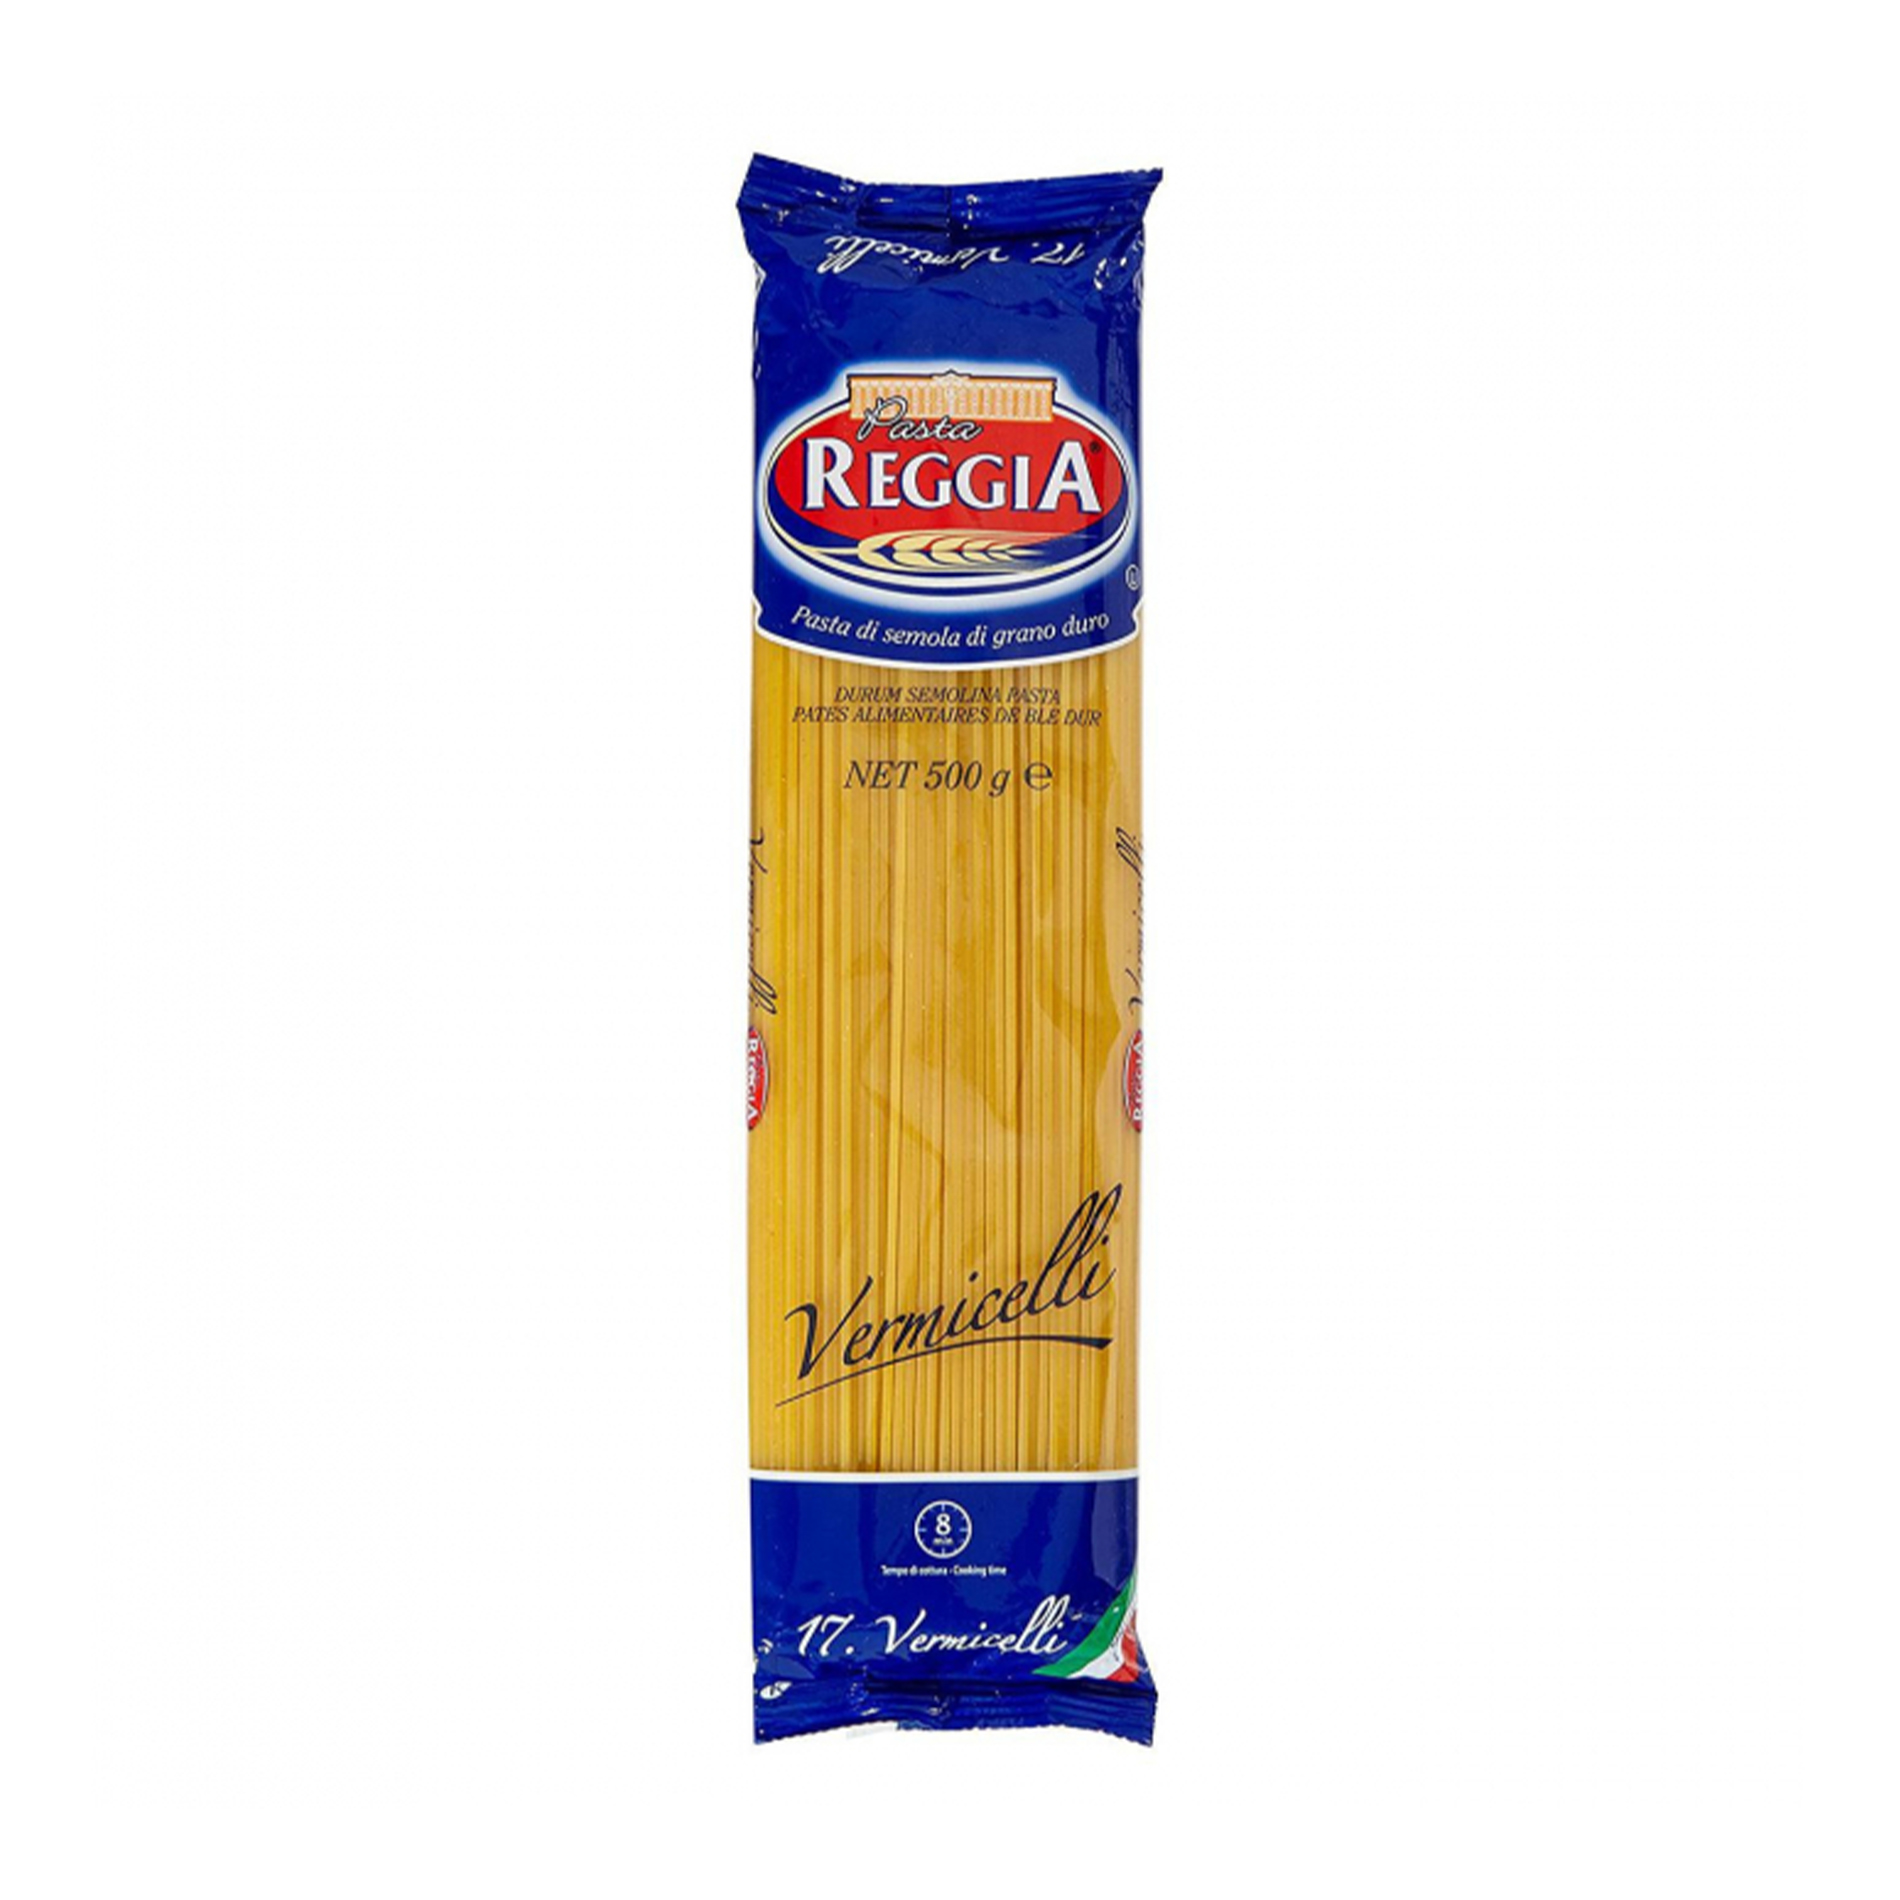 Упаковка спагетти. Спагетти Spaghetti Reggia di Caserta. Pasta Reggia вермишель. Reggia di Caserta макароны. Макароны Fusilli Reggia.